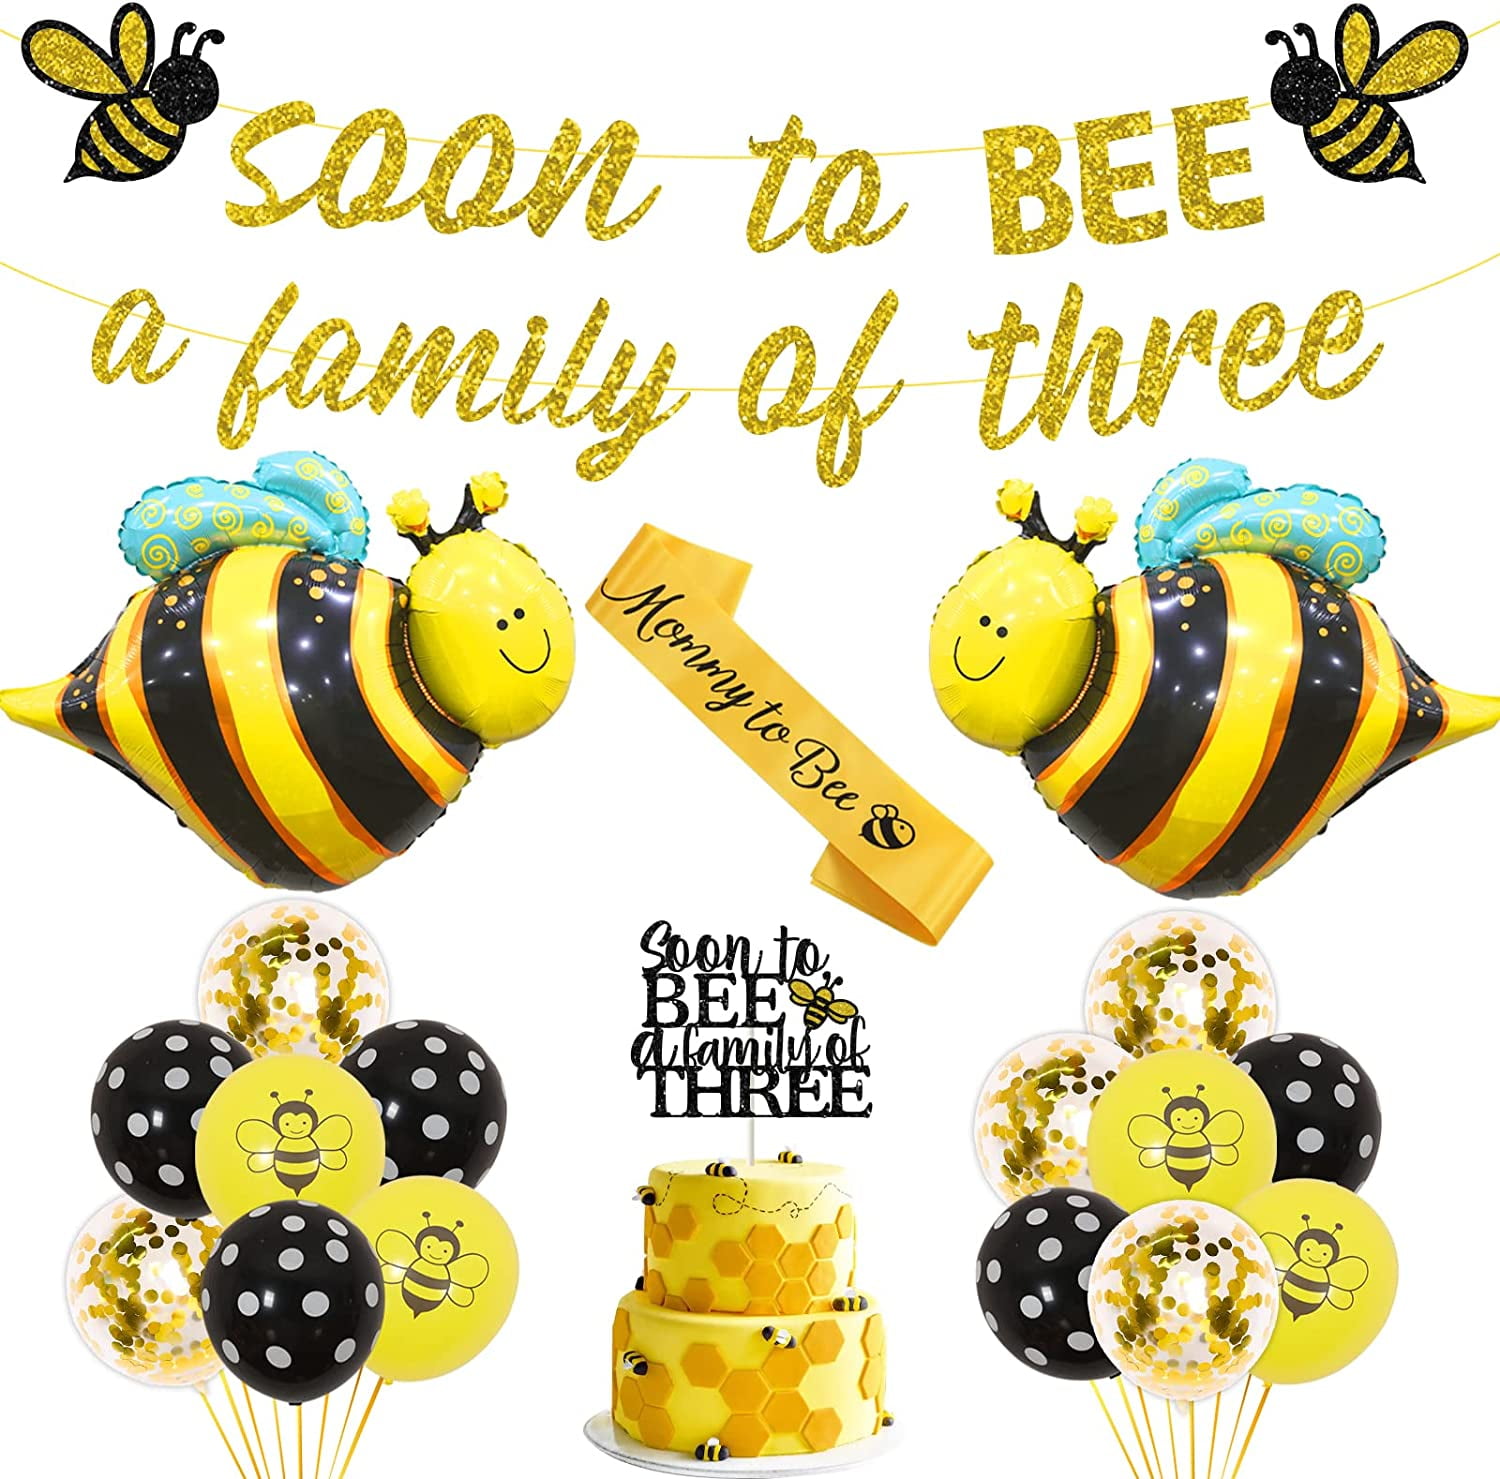 Printable Bee Decor Set of 5 Bee Hive Bumble Bees Honey 